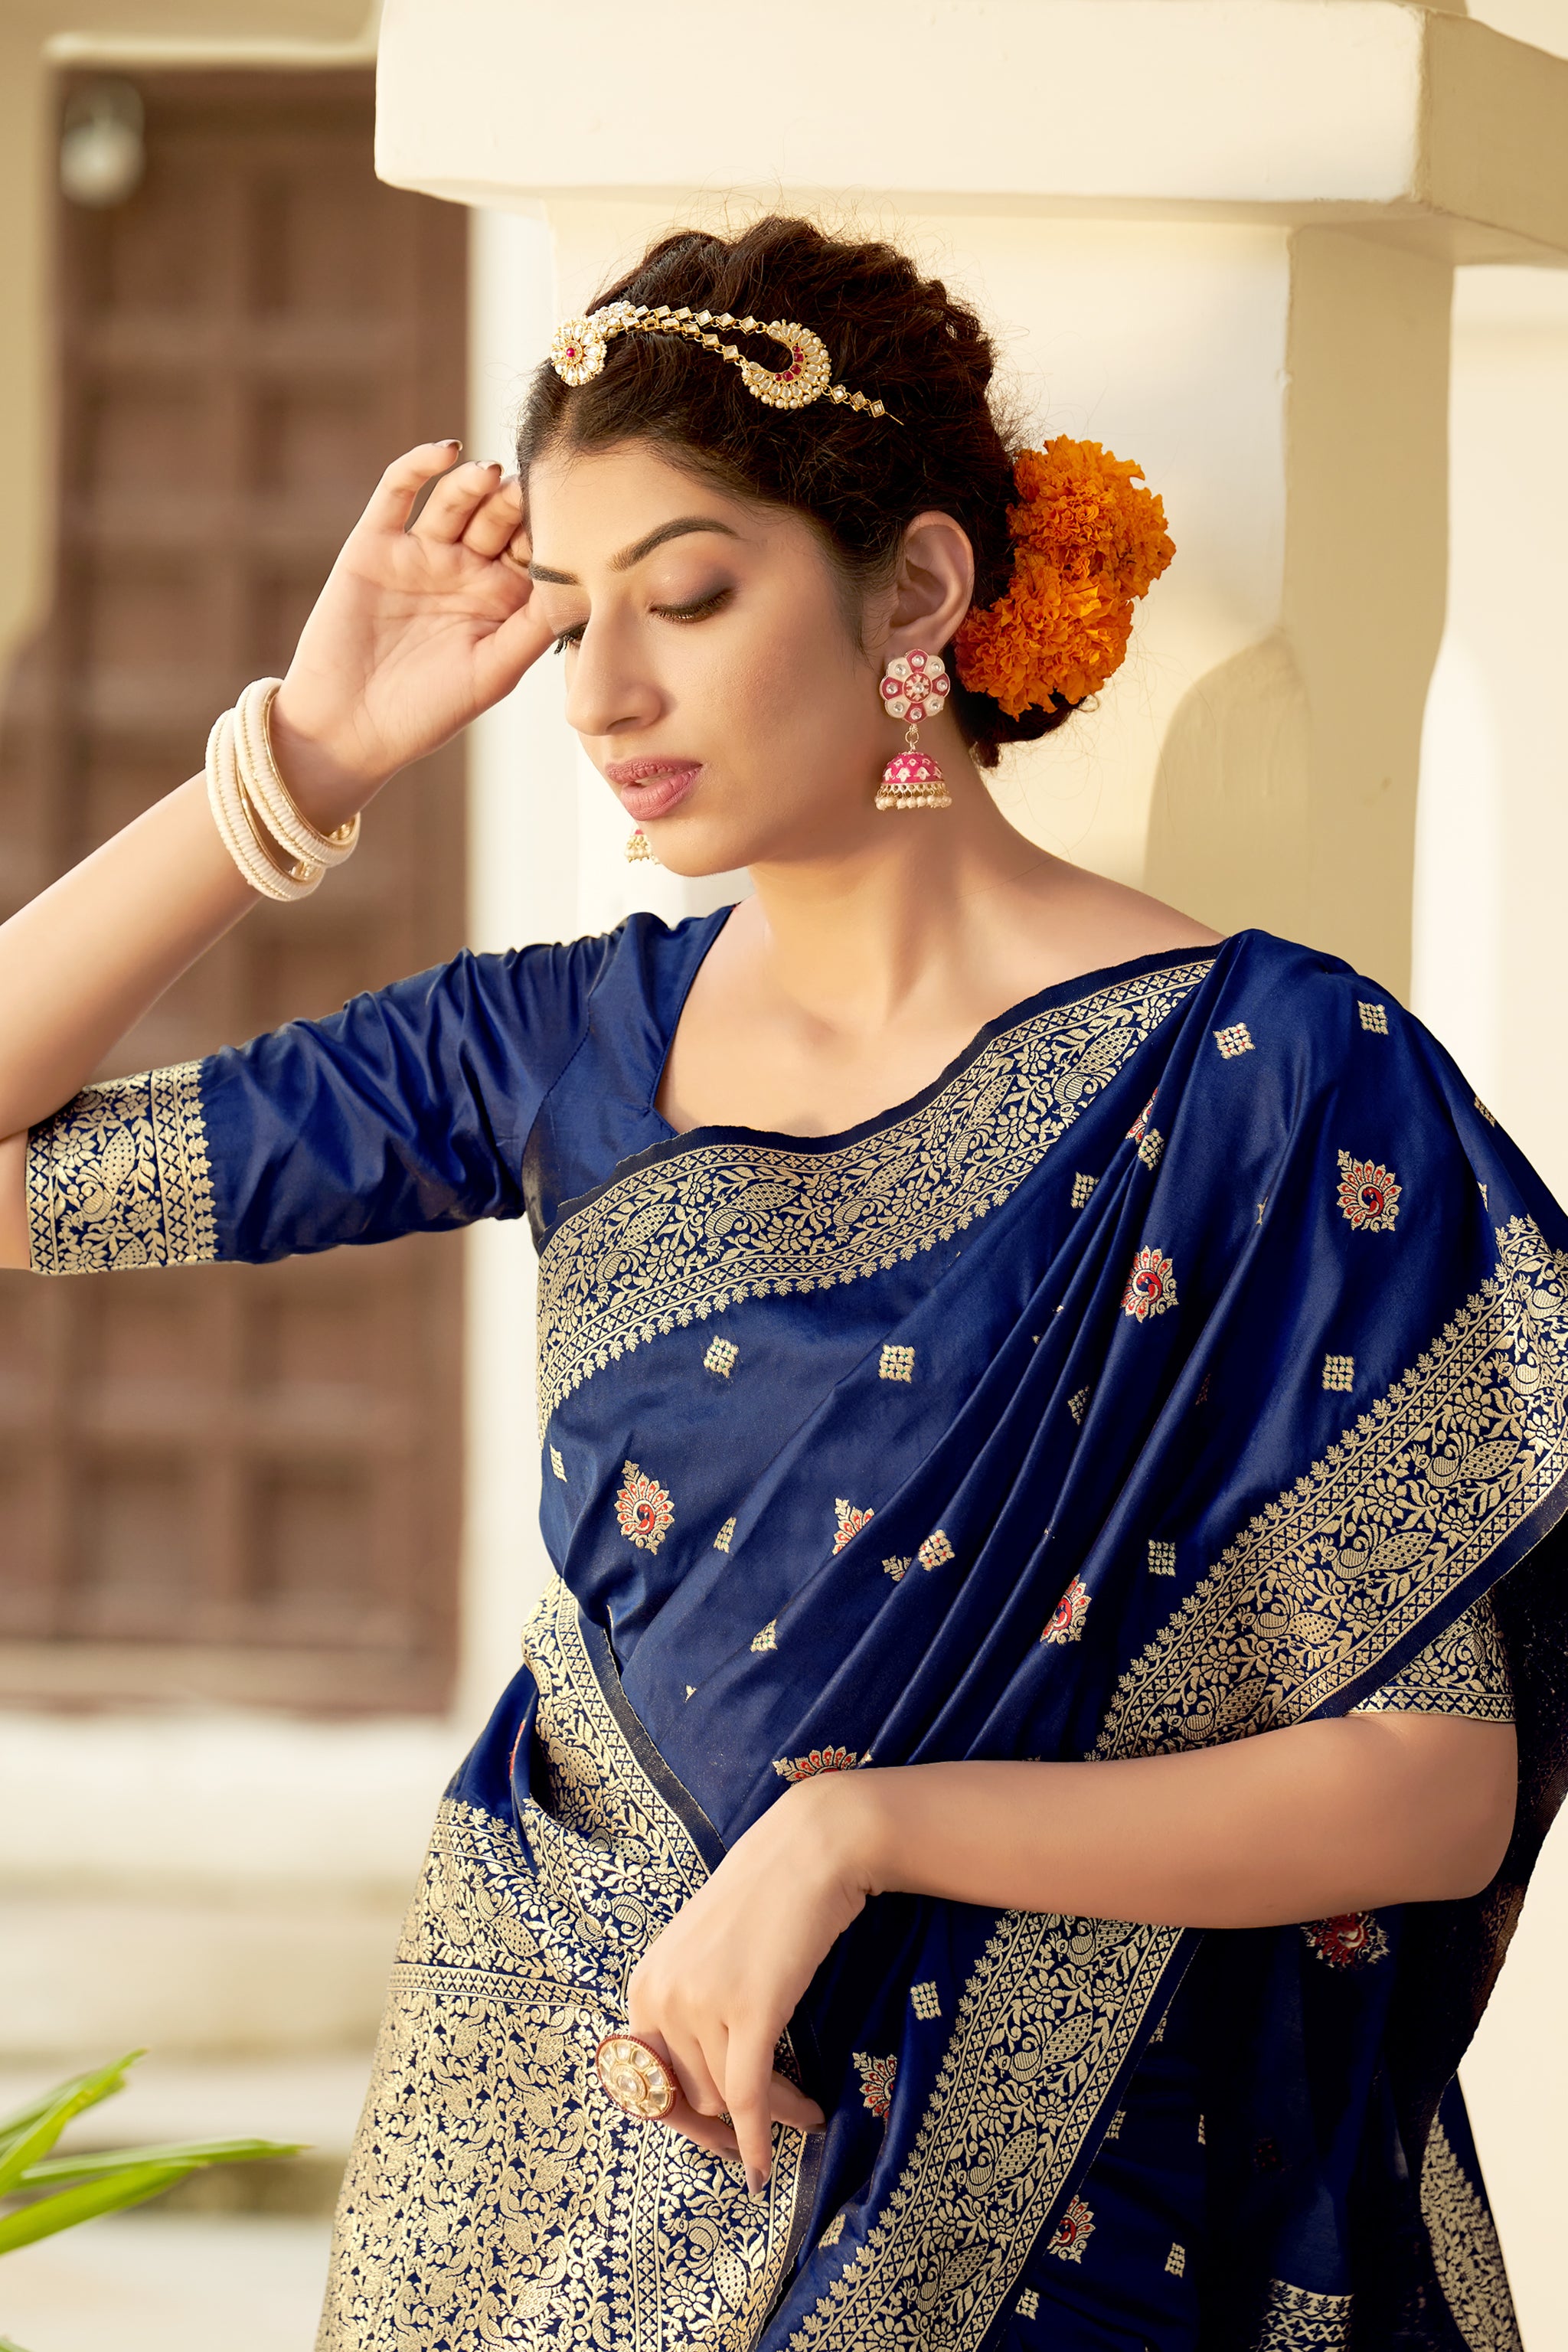 Women's Navy Blue Color Banarasi Silk Festive Wear Saree - Monjolika